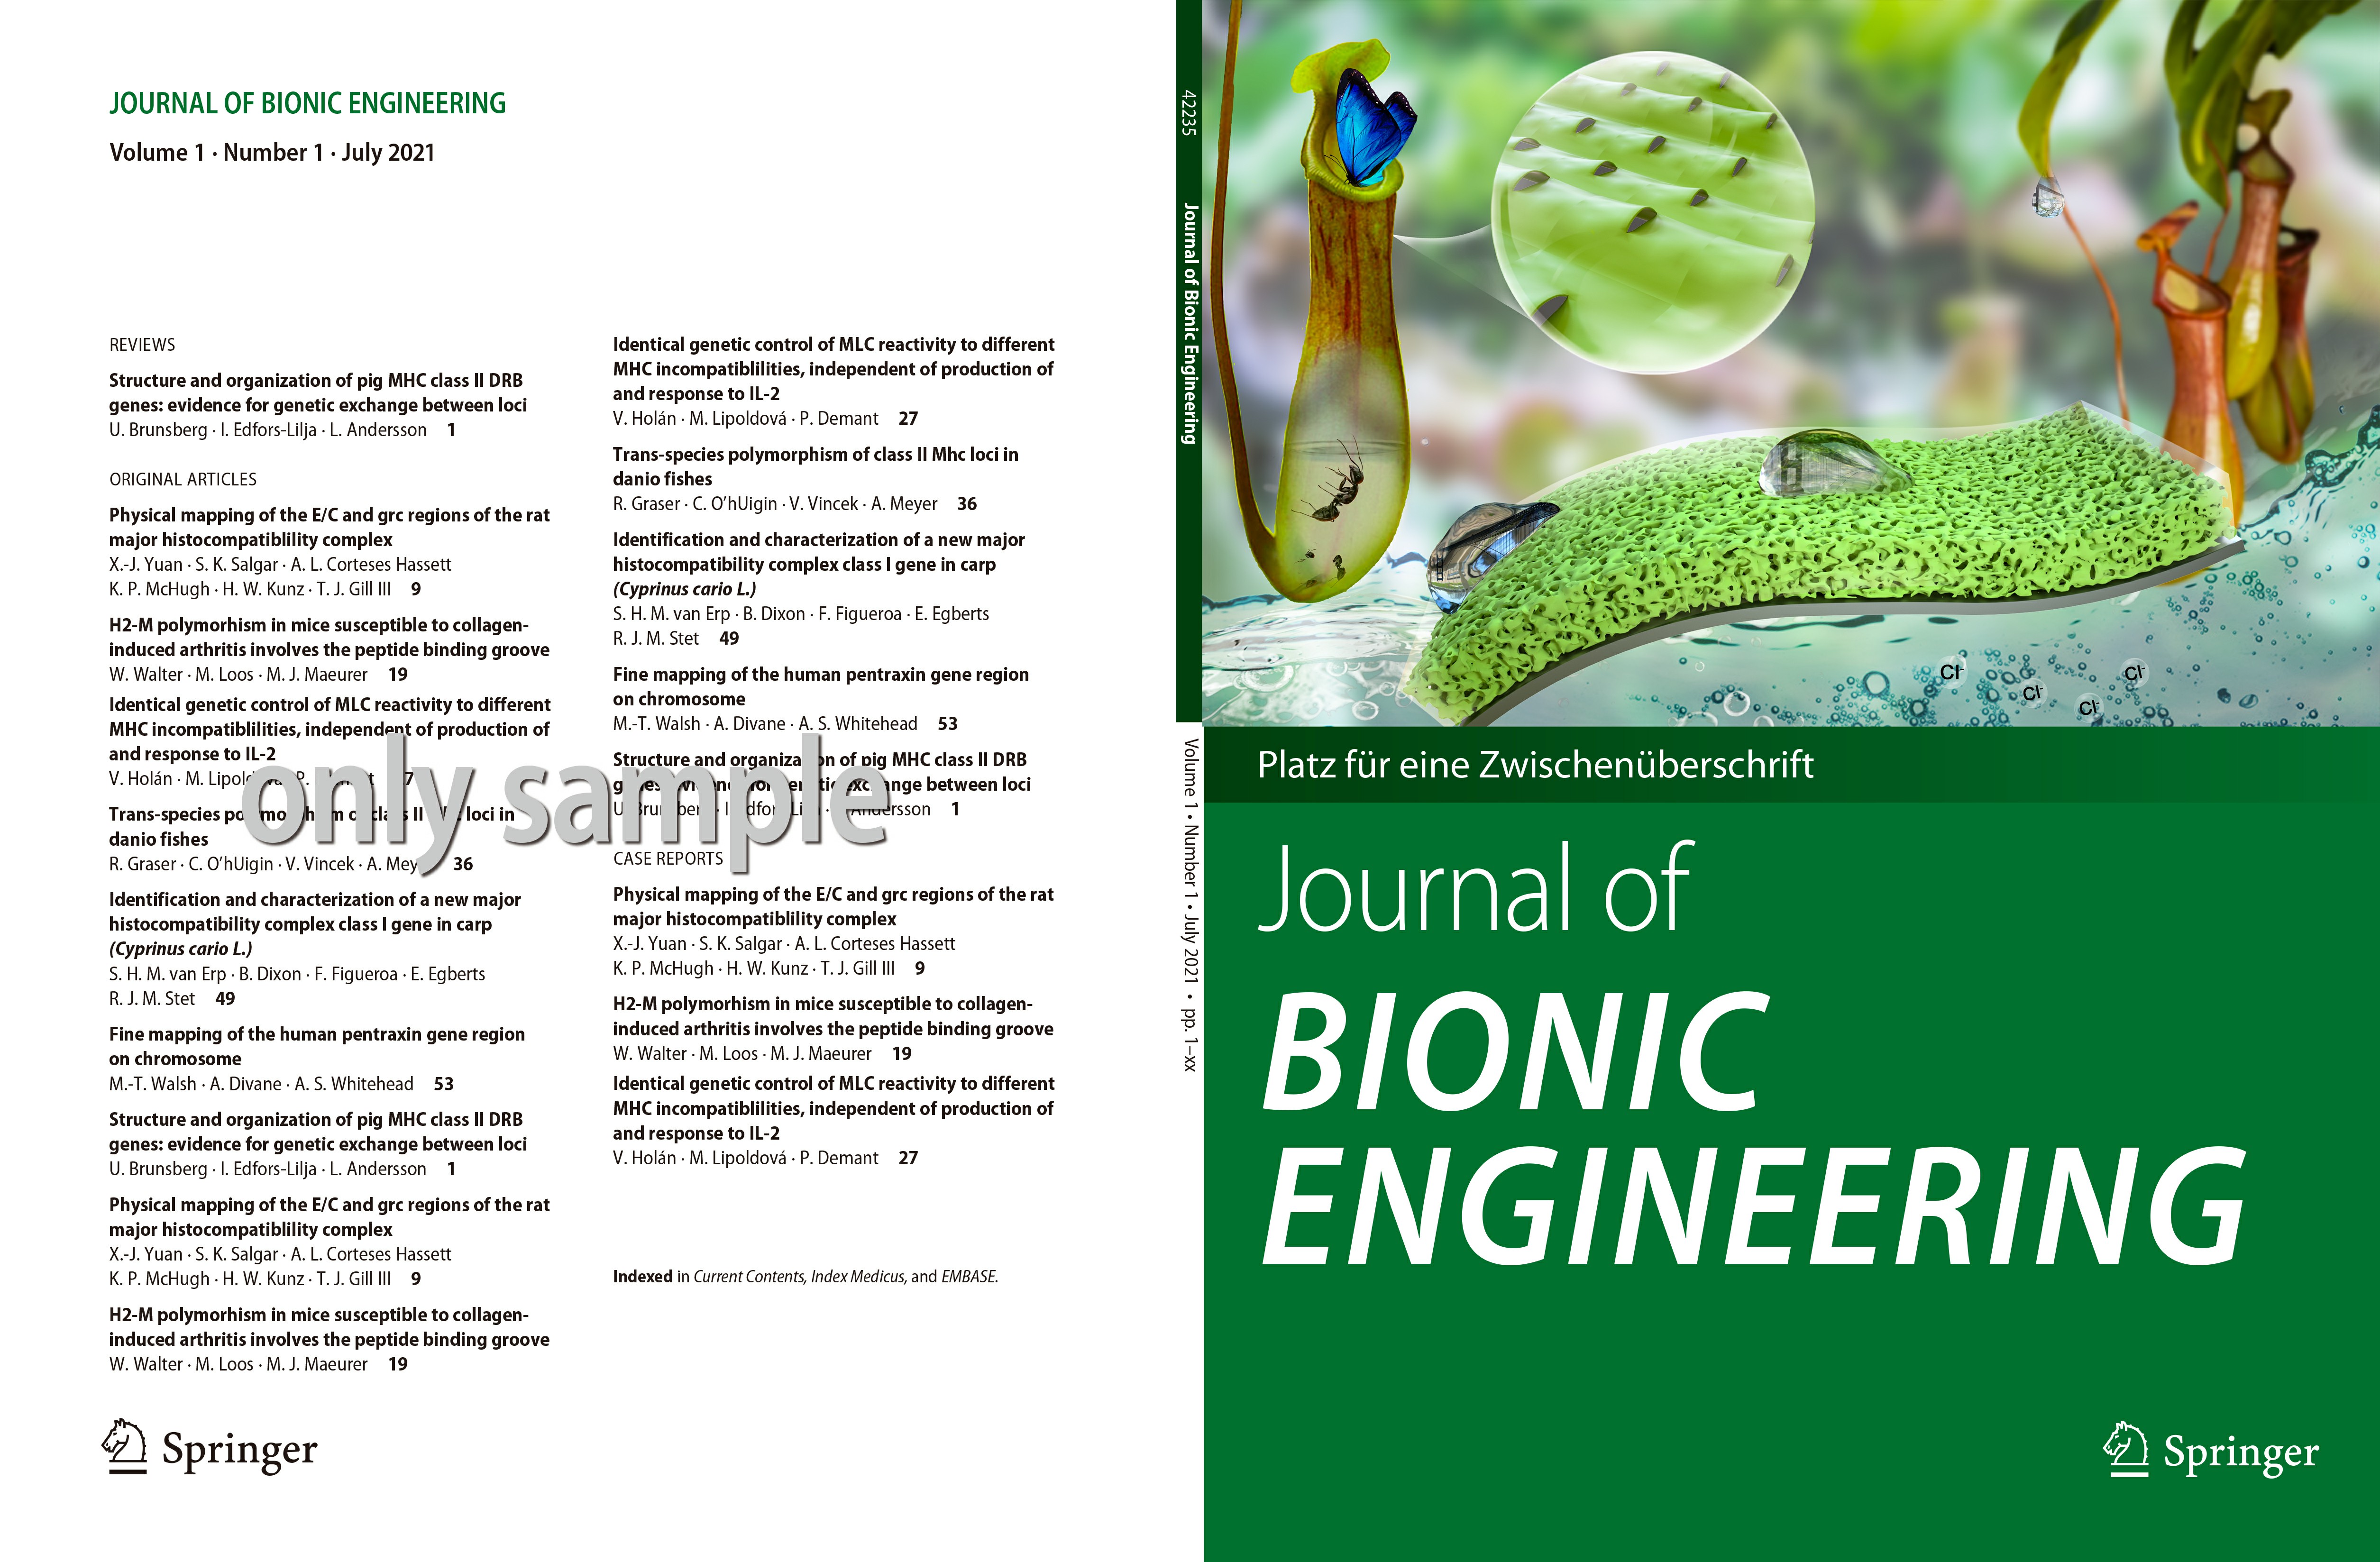 Z42235 Journal of Bionic Engineering